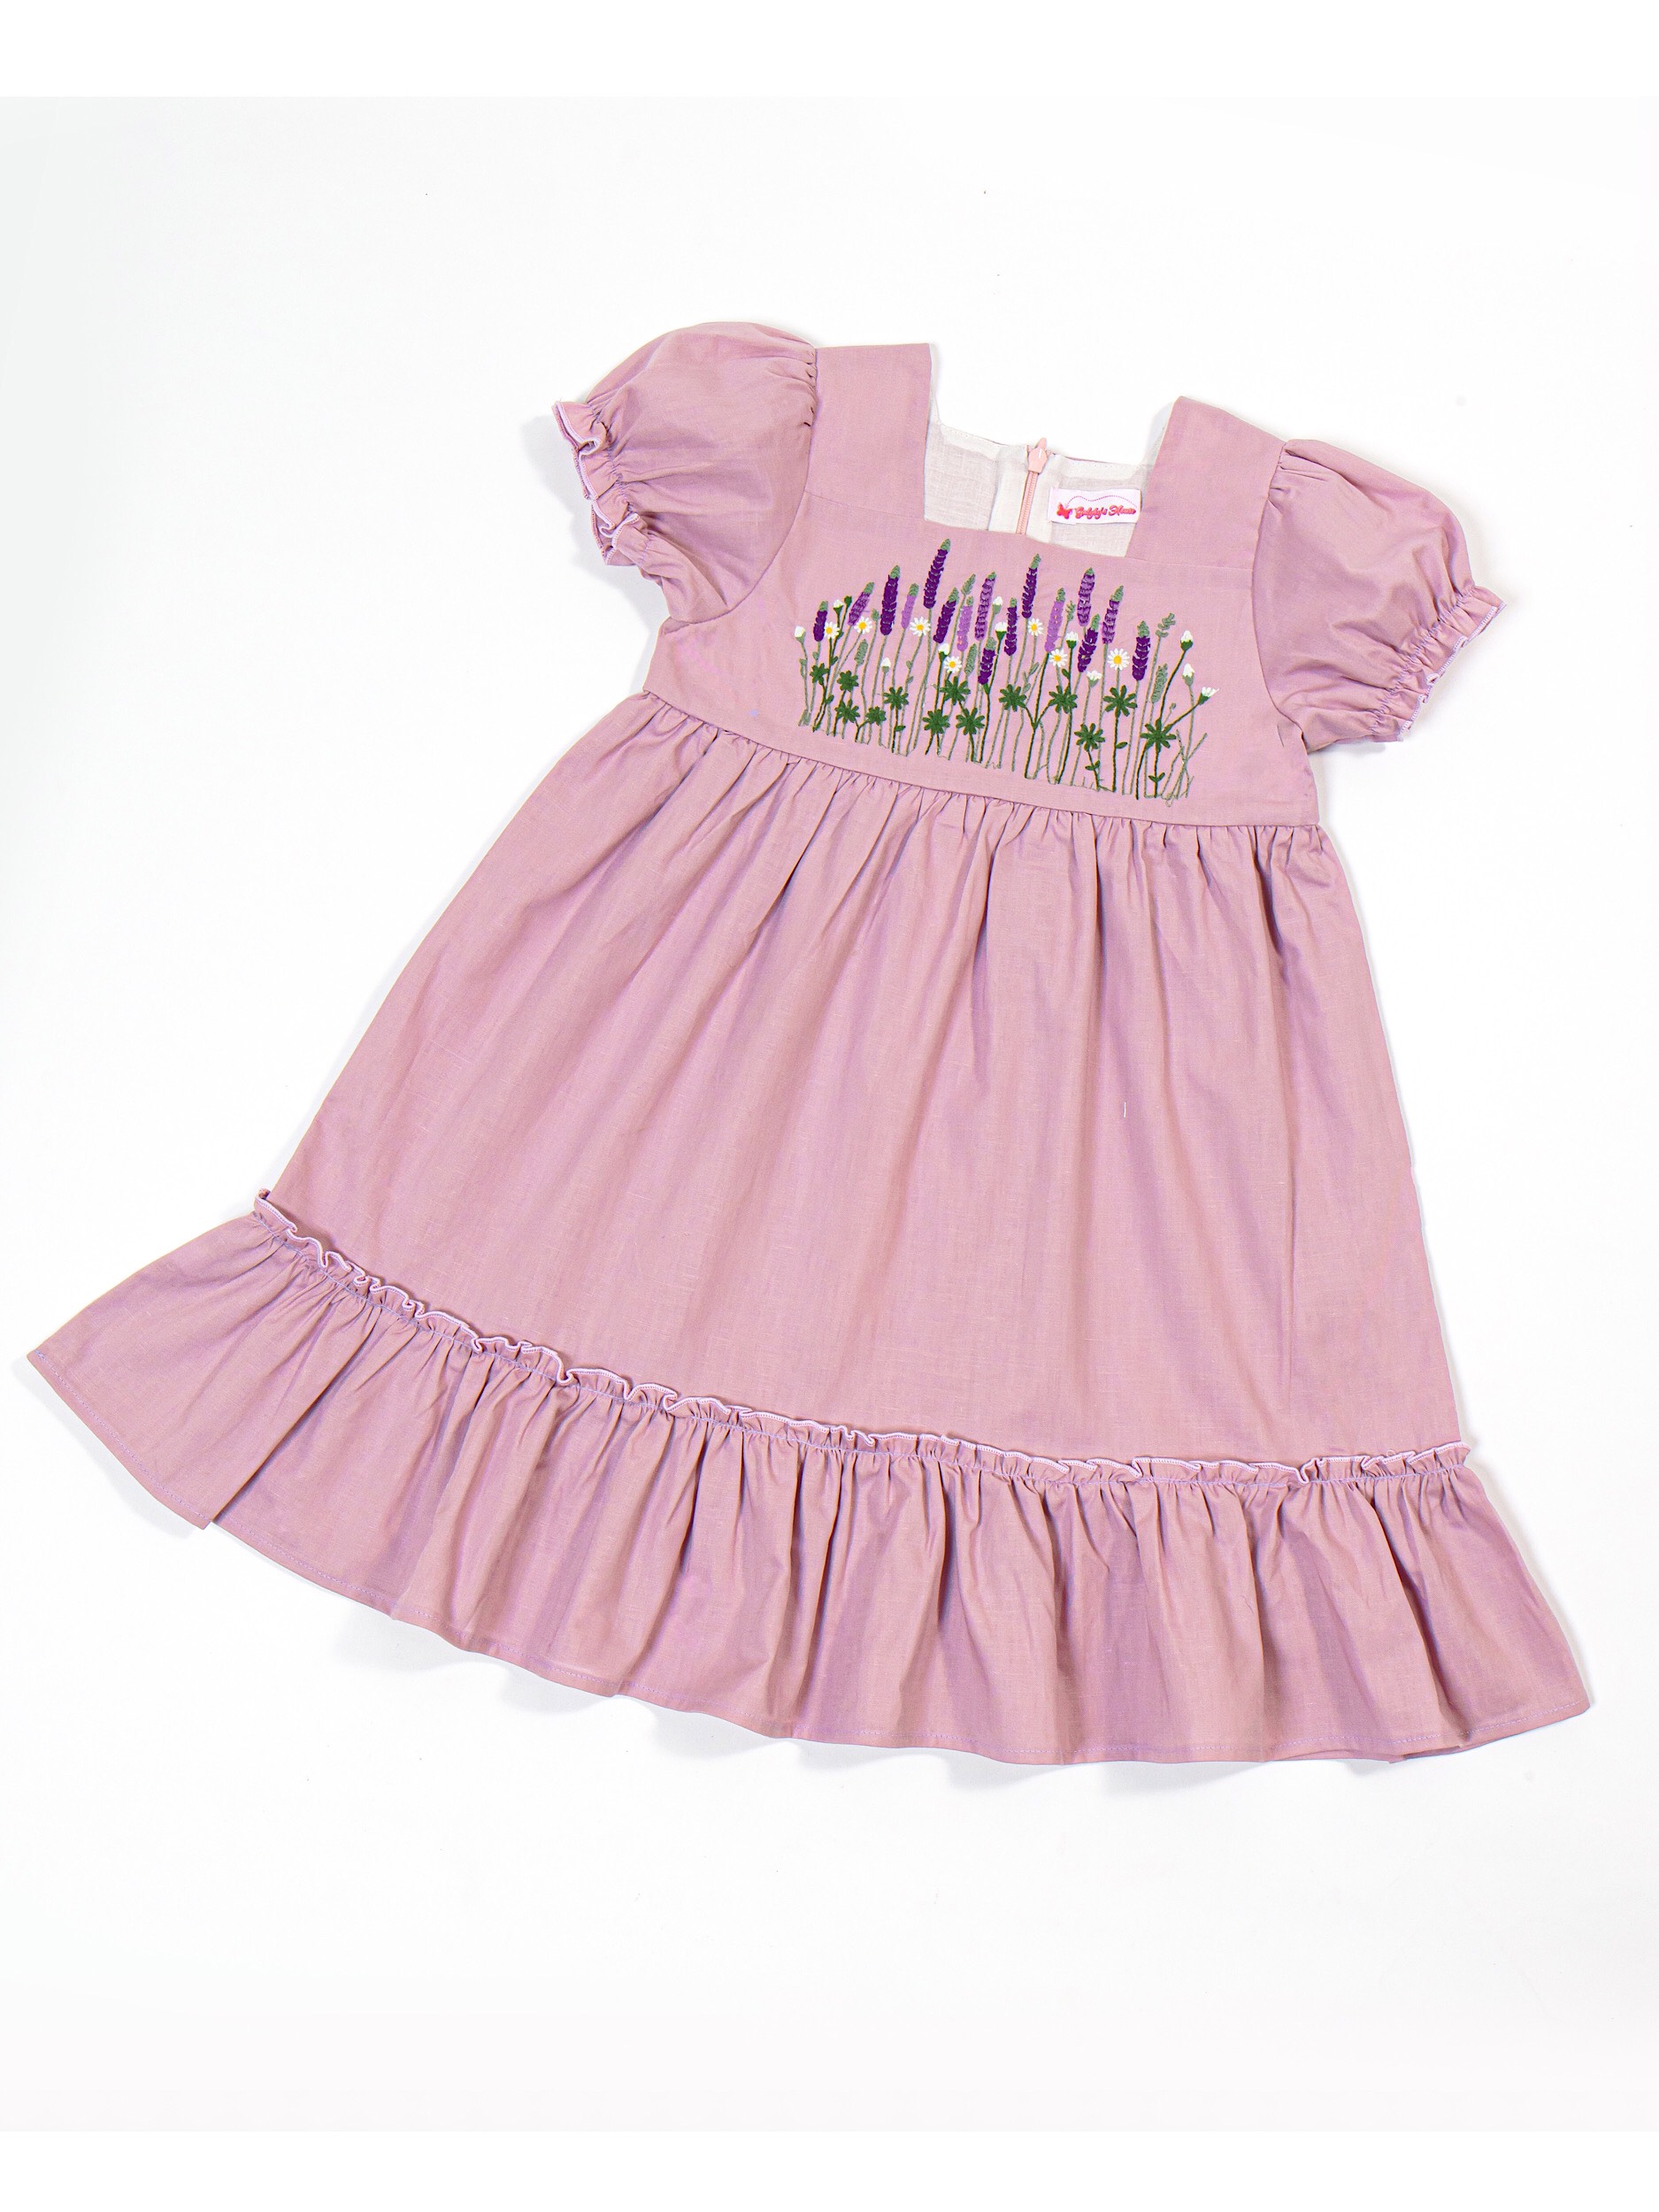 Áo đầm linen hồng tím bé gái thêu vườn hoa - Purple Pink Linen ...